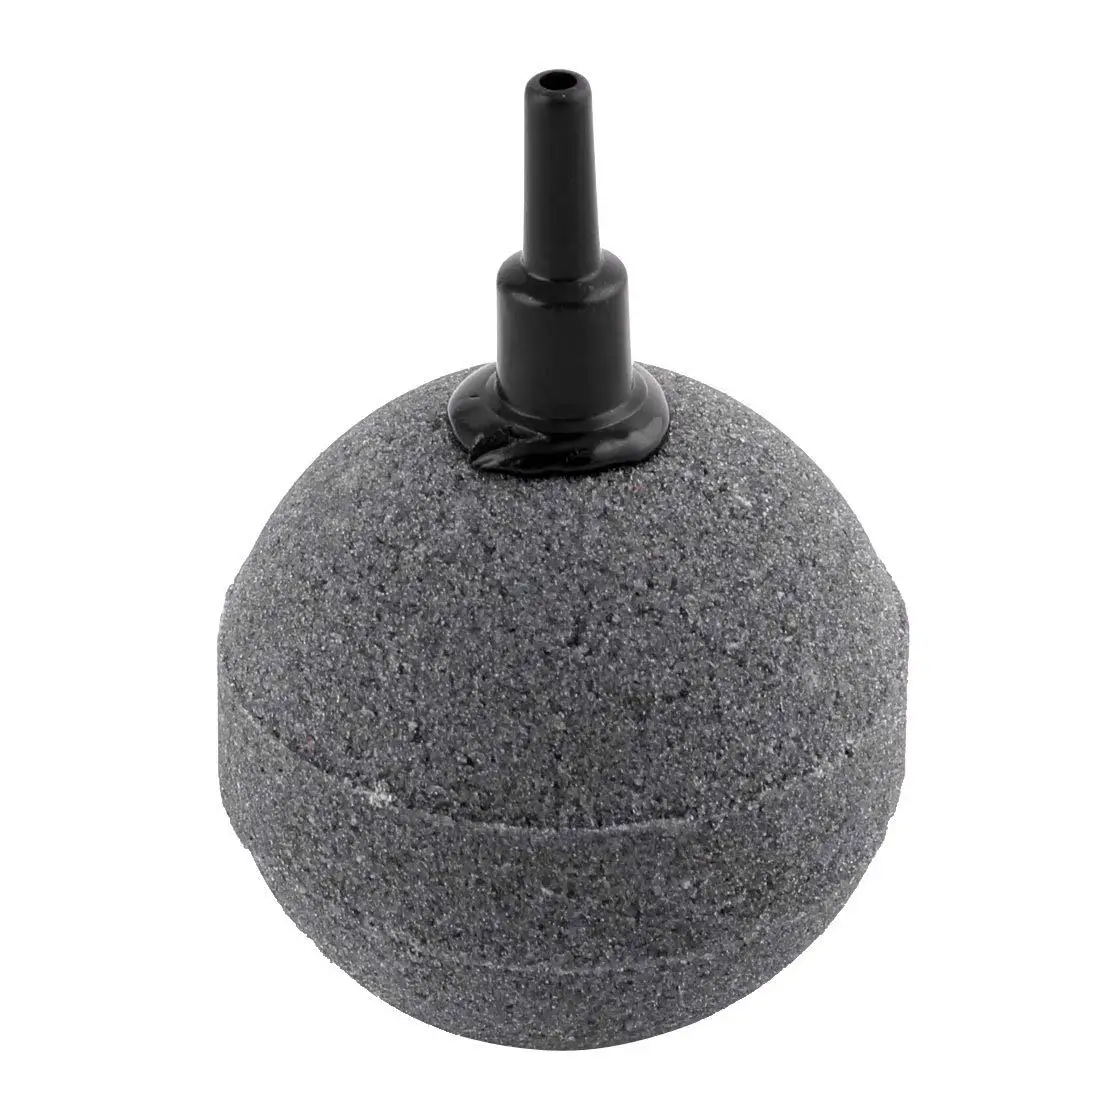 Air stone. Распылитель воздуха "цилиндр" Aquael Air Stone (25 х 15 мм). Распылитель воздуха "шарик" Air Stone d20мм (акваэль). Корундовый распылитель s-03. Распылитель-шар для аквариума Hailea b-003.